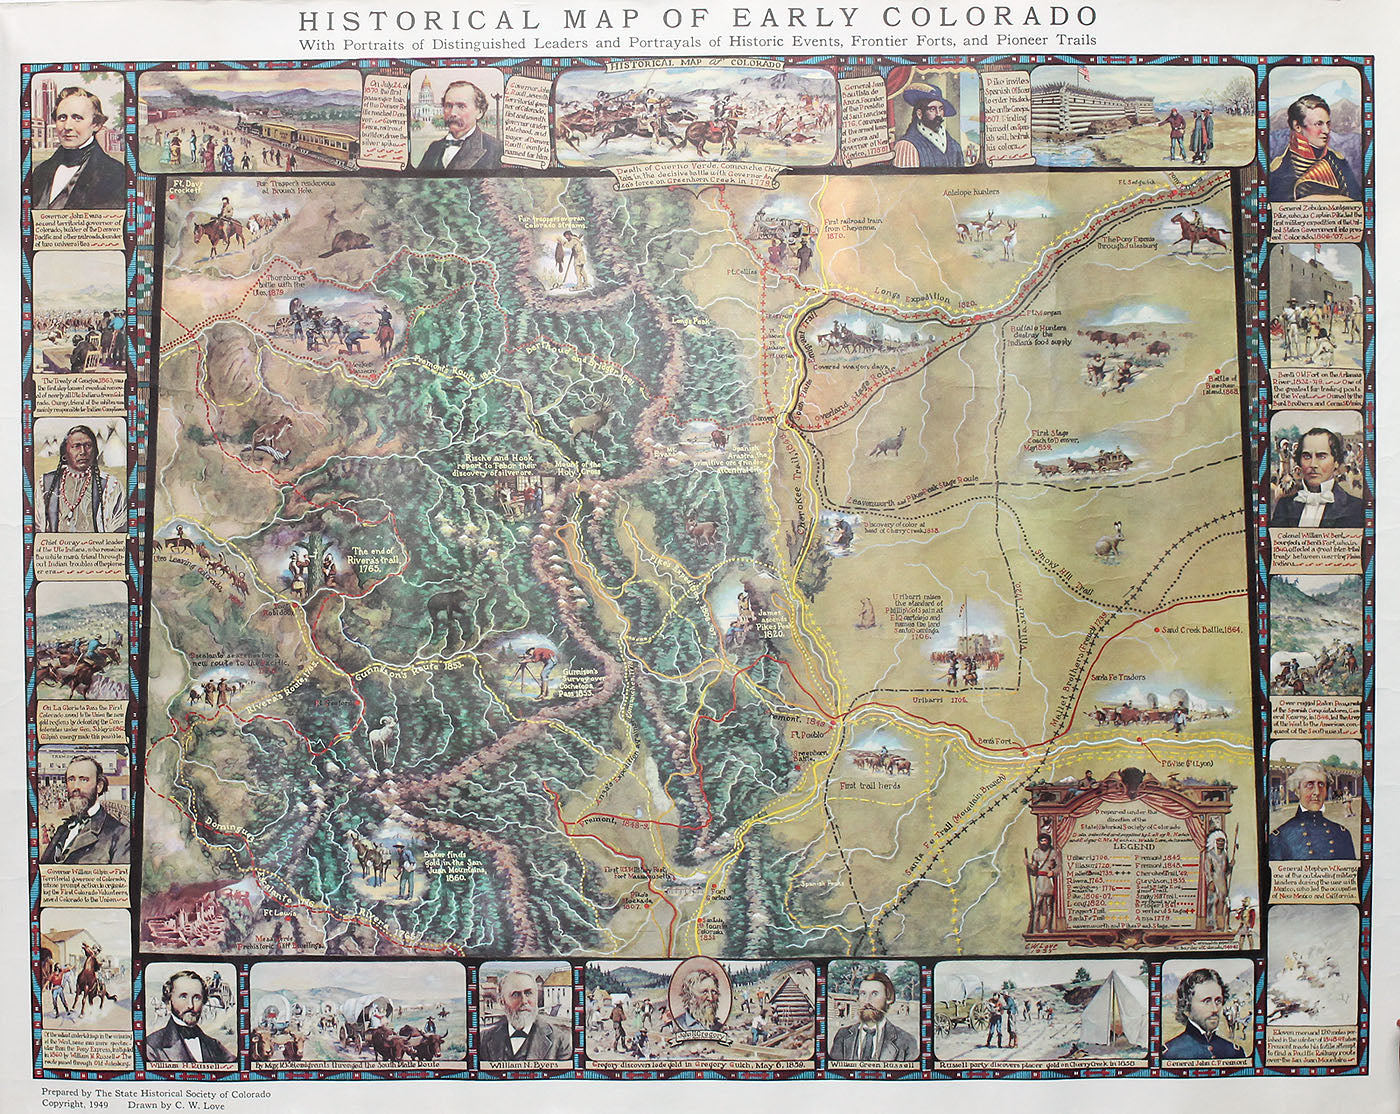 (Colorado) Historical Map of Early Colorado